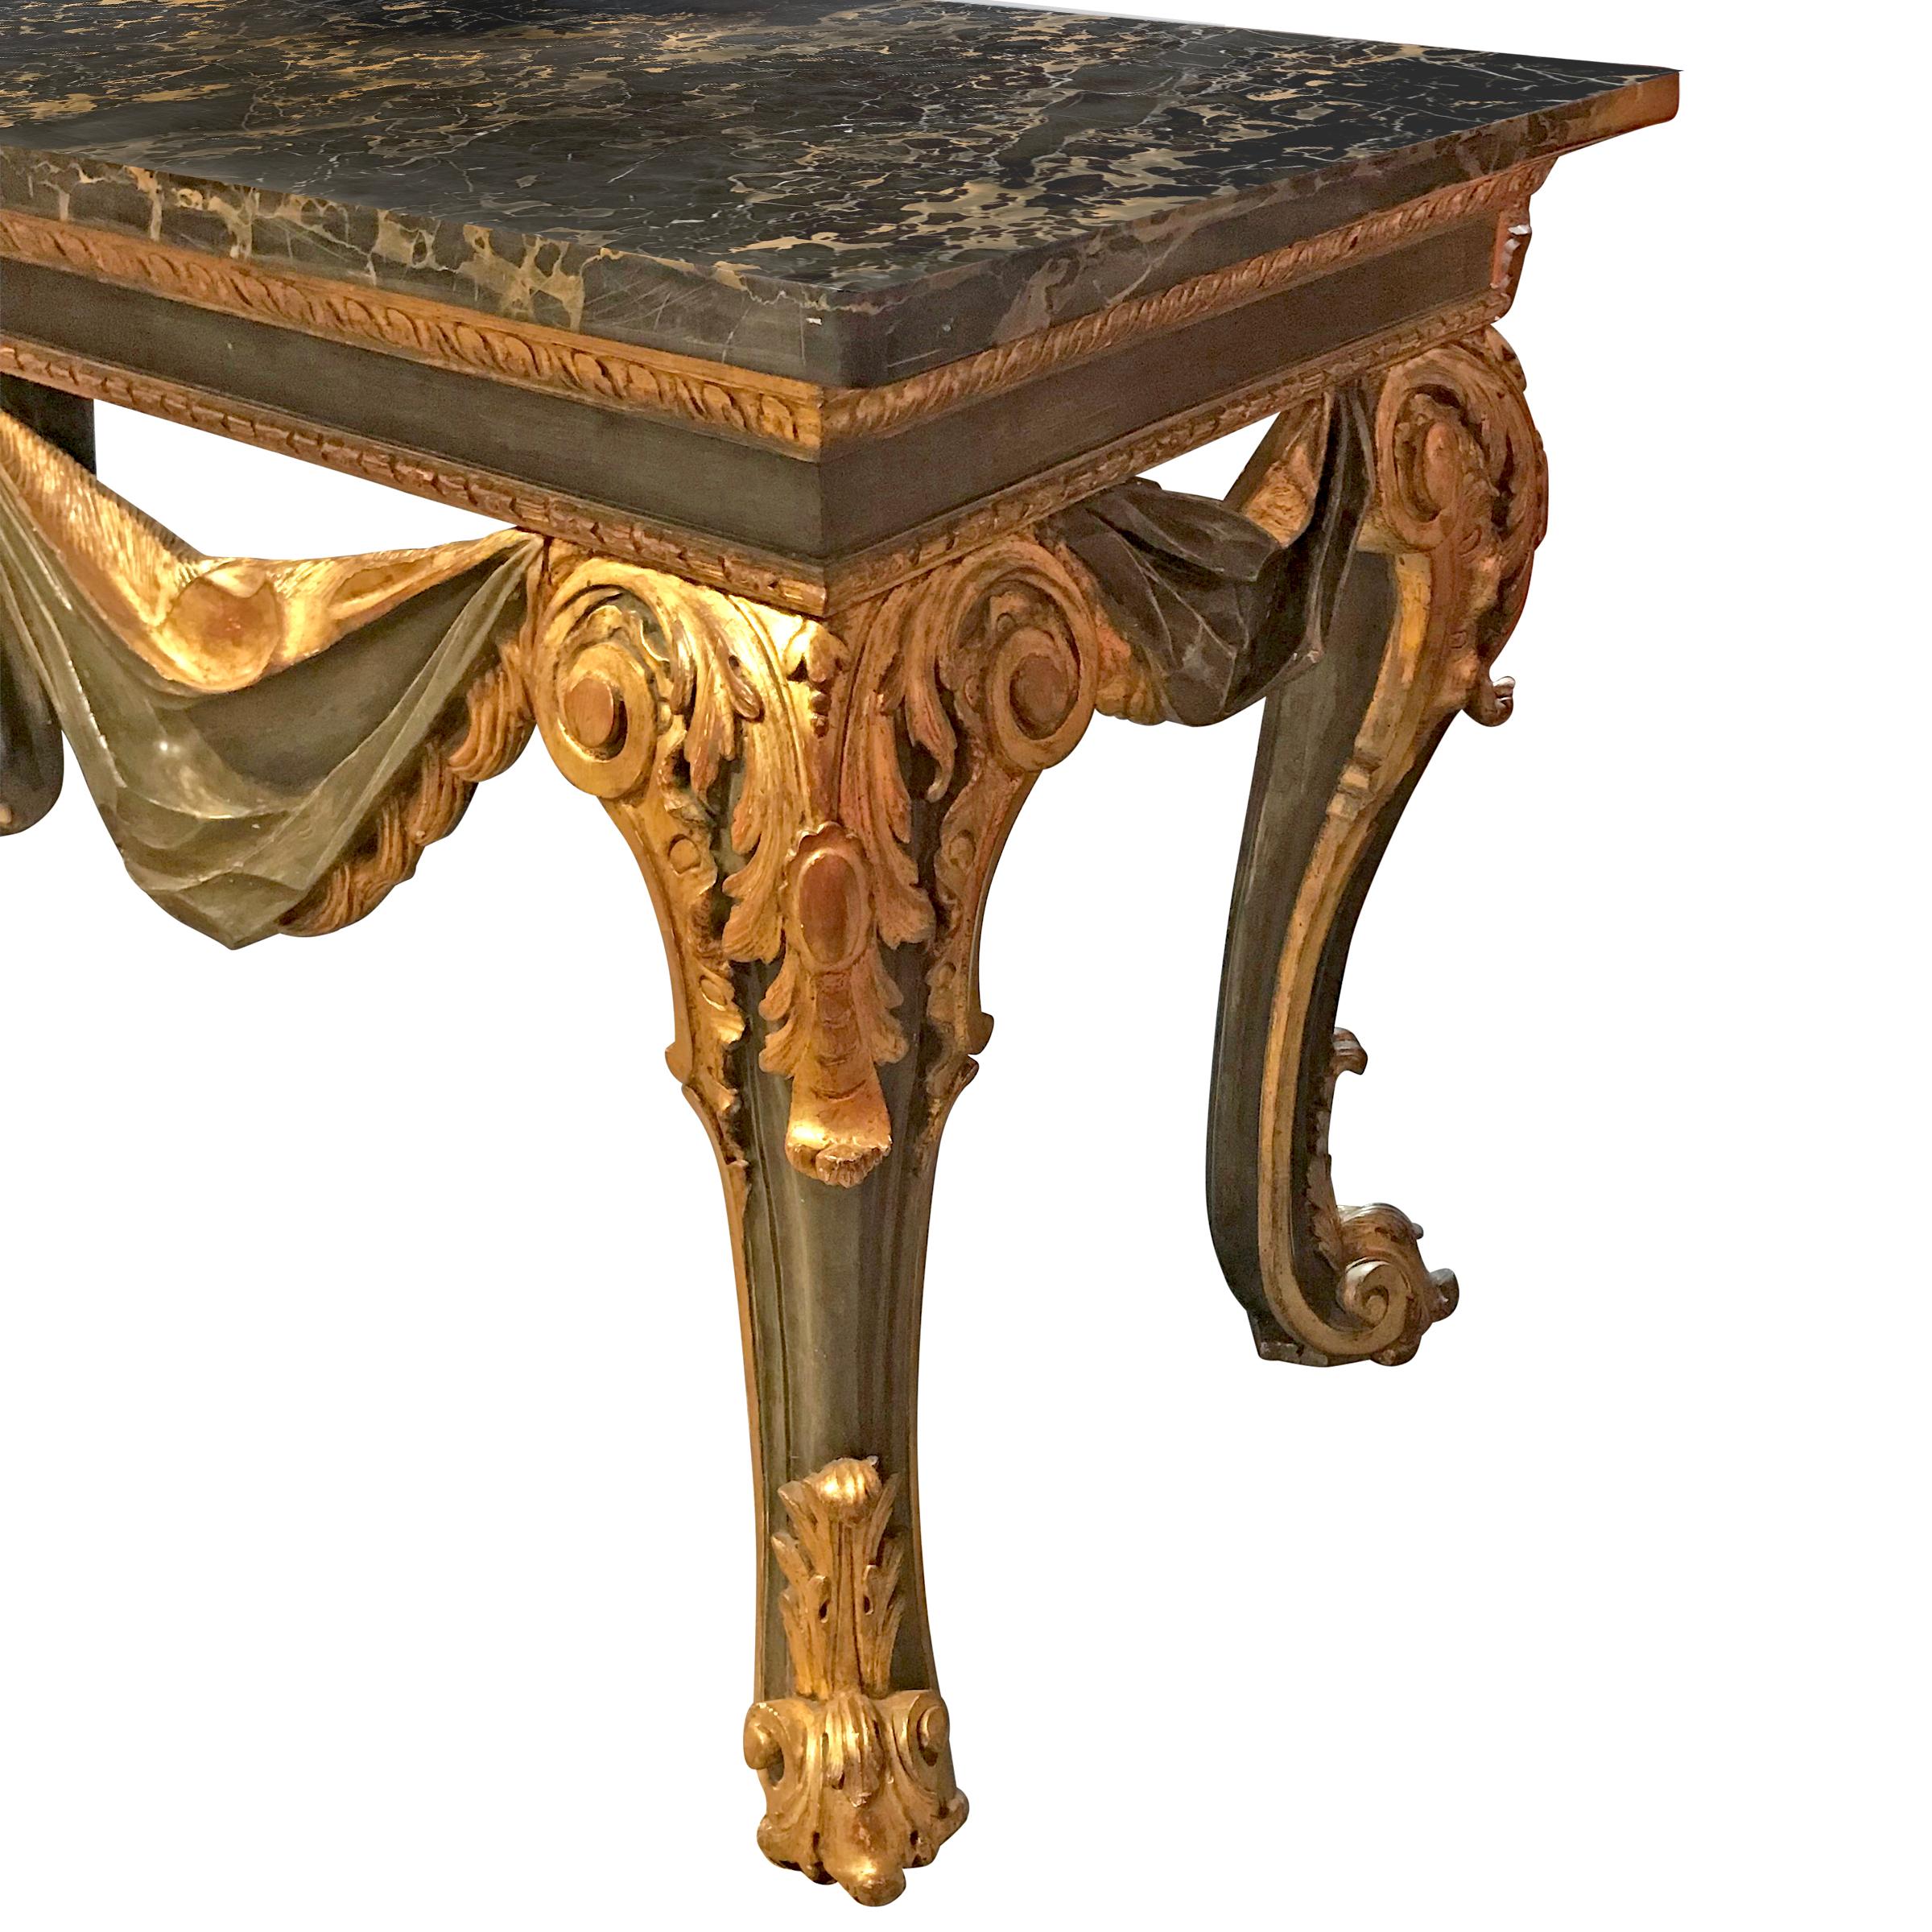 Baroque Grande 19th Century Italian Marble-Top Console Table